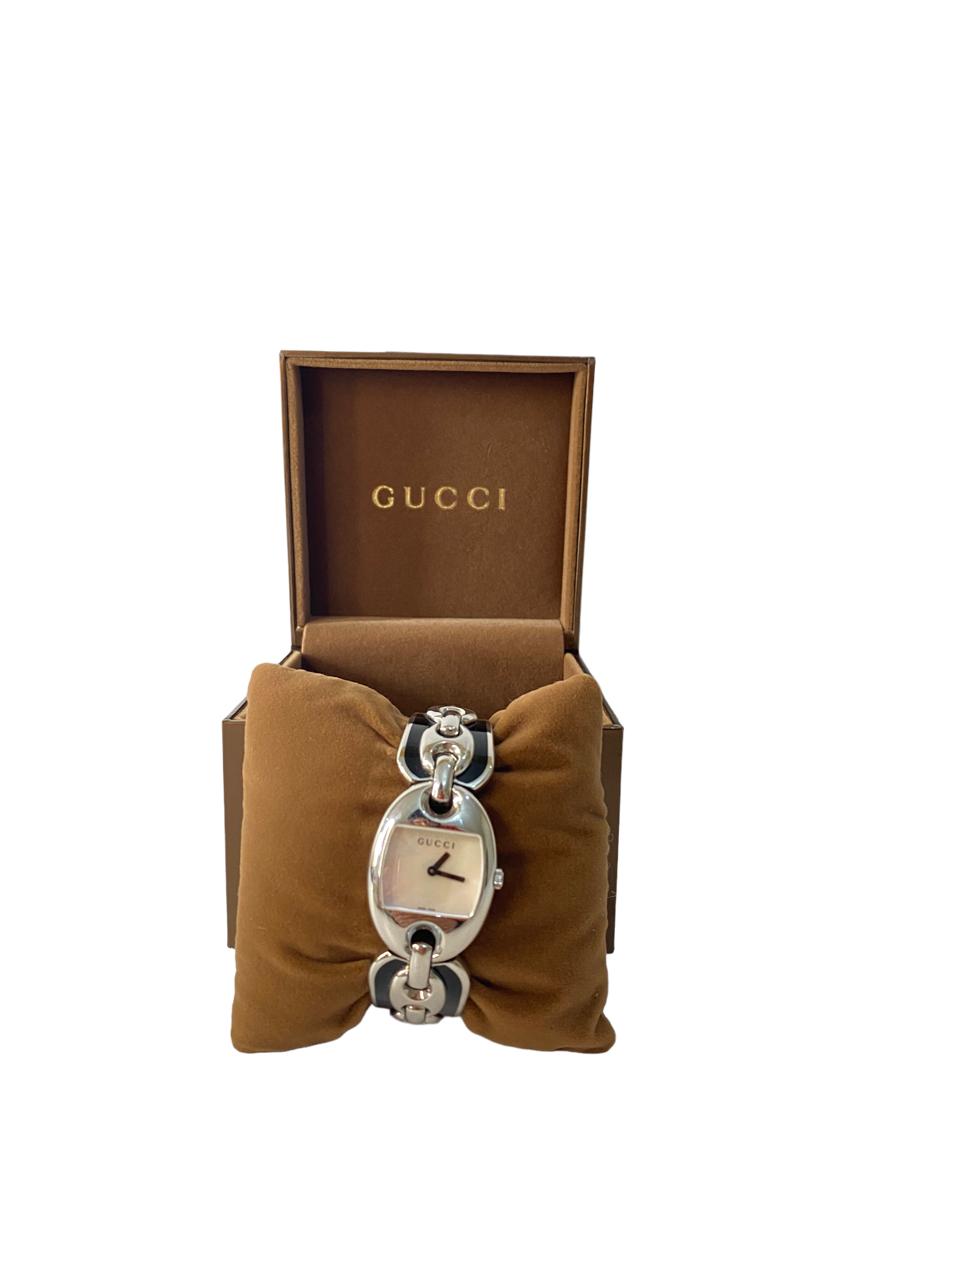 Gucci Bicolor Marina Chain Bracelet Watch